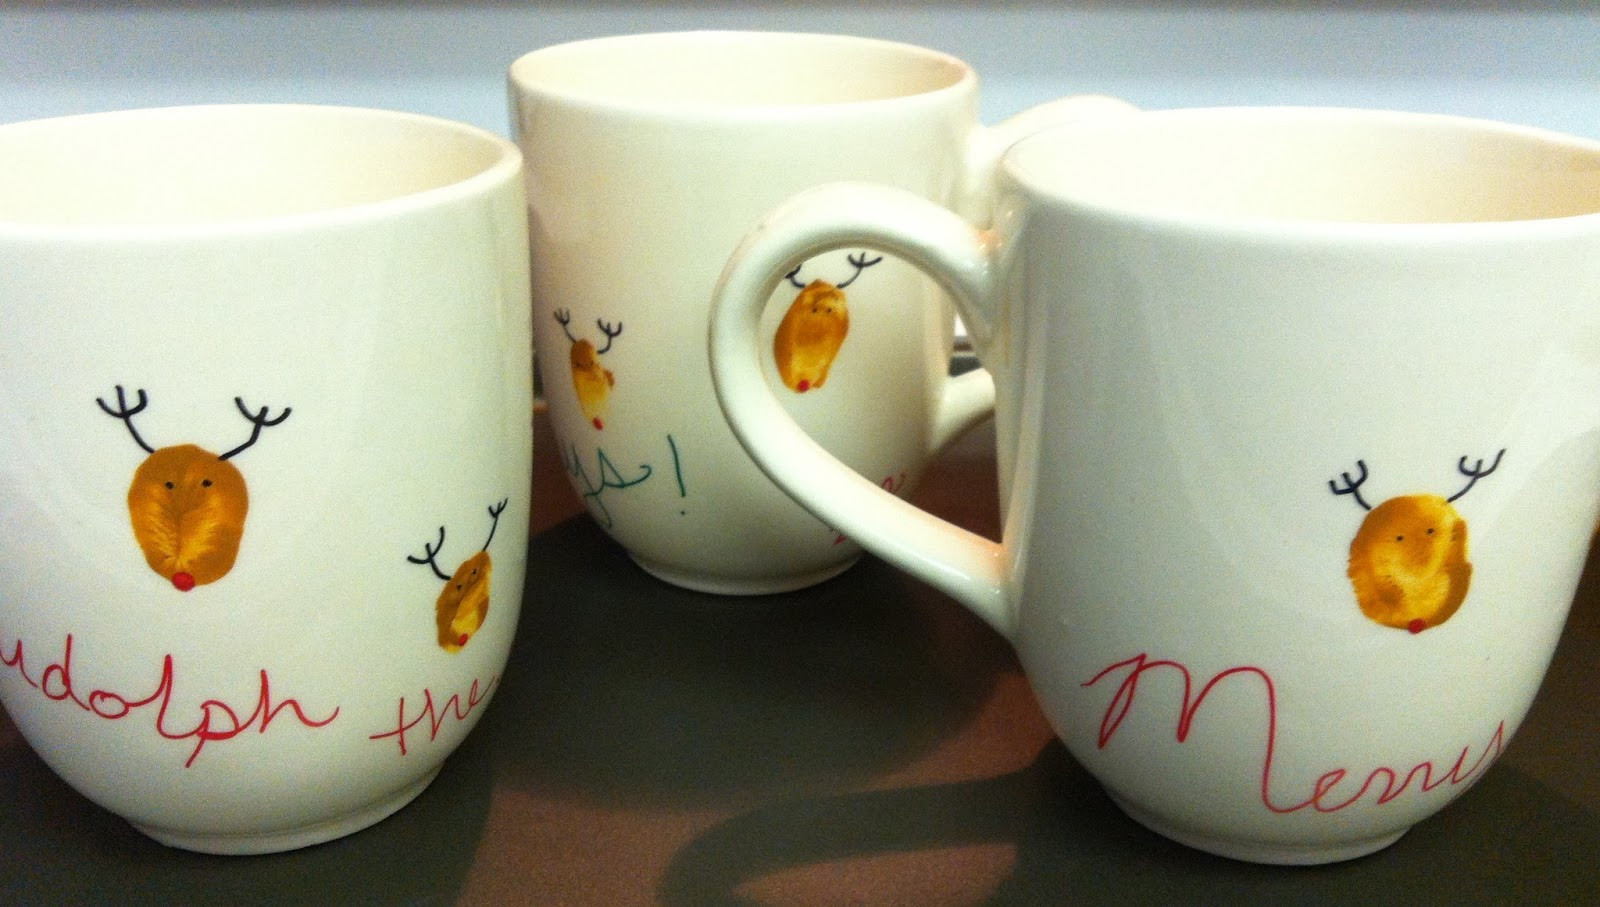 Best ideas about DIY Christmas Mugs
. Save or Pin Handmade by CJ DIY Christmas Sharpie Mugs Now.